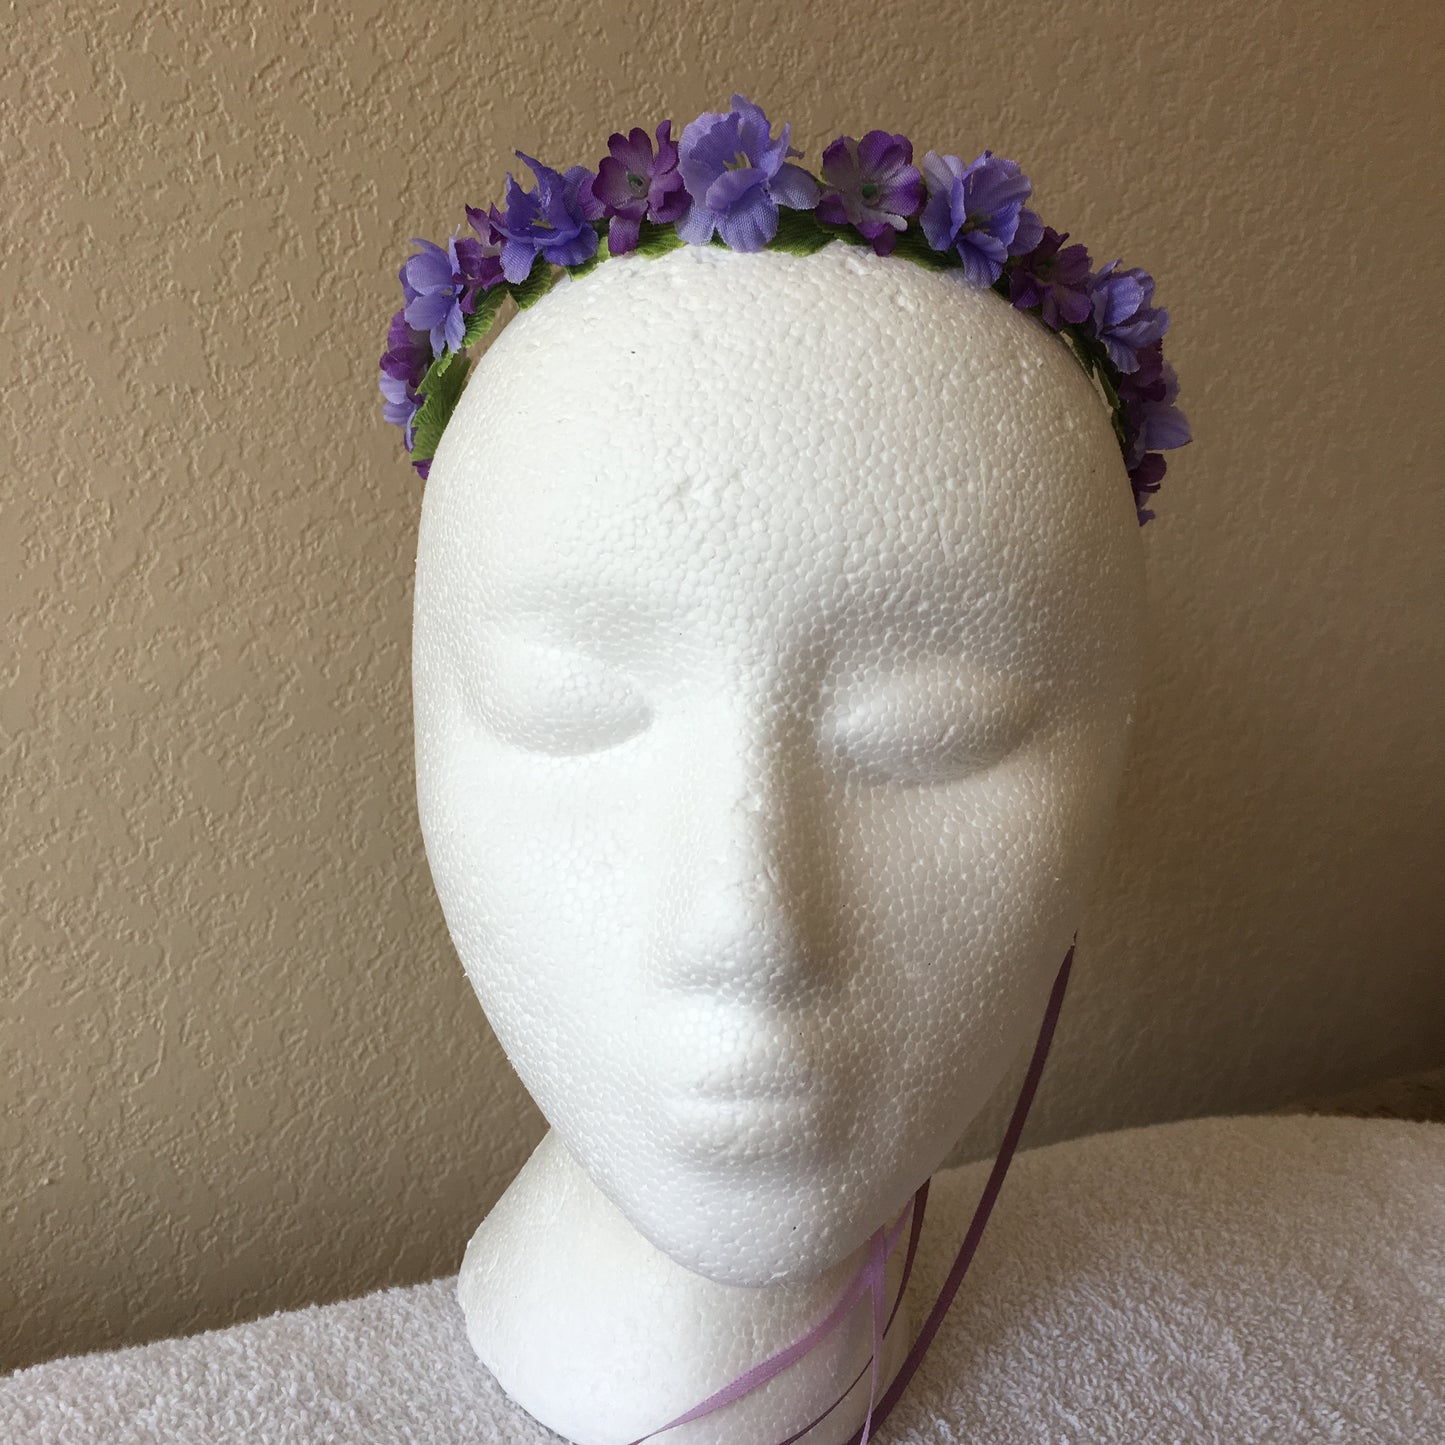 Extra Small Wreath - Light & dark purple flowers